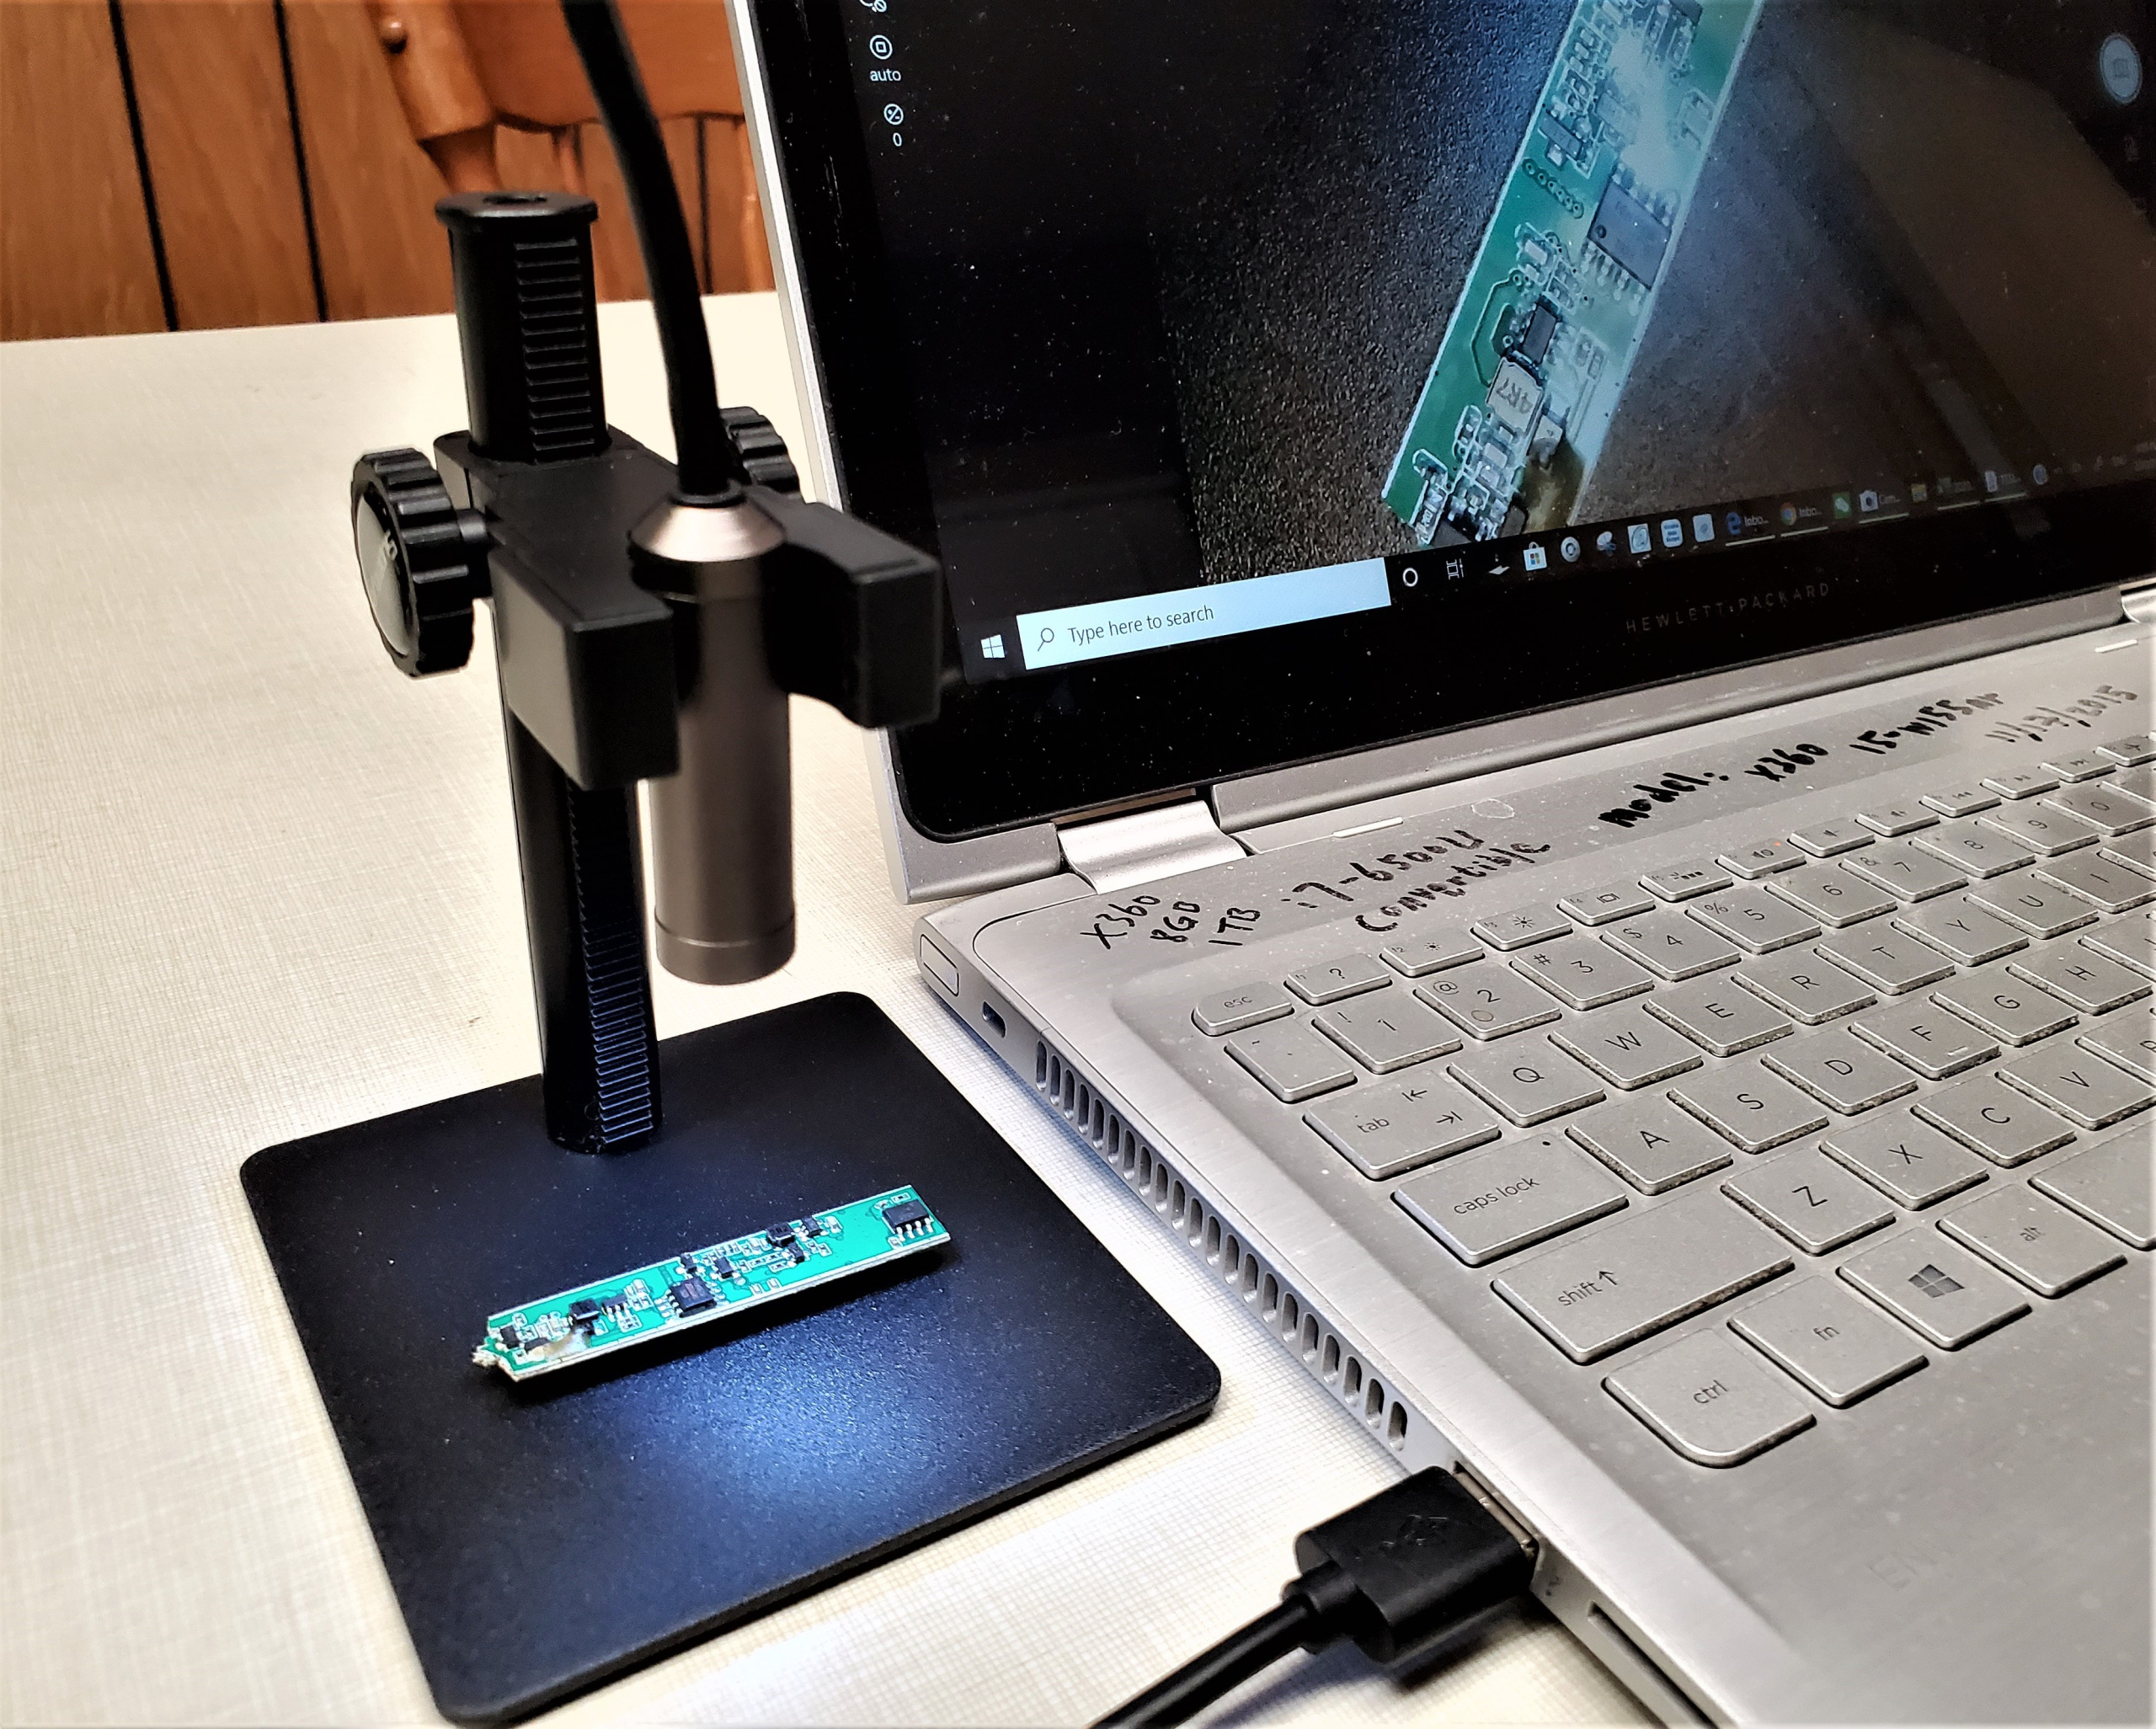 Mini 8mm USB Flexible Inspection Camera Microscope with Manual Focus -  Oasis Scientific Inc.